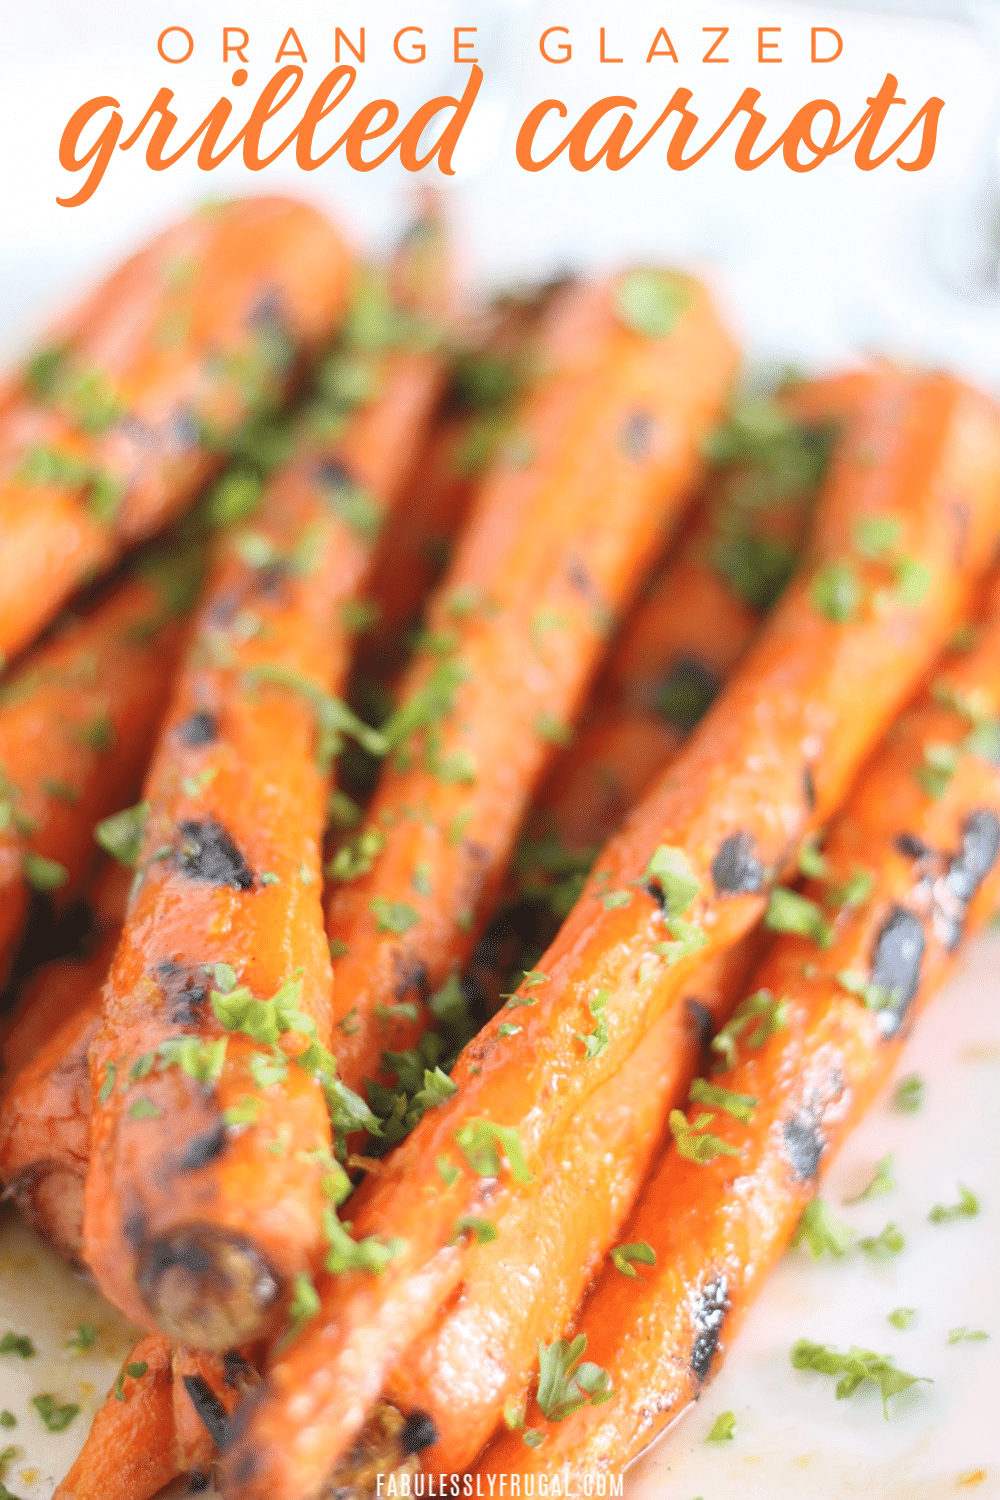 Orange glazed carrots on the bbq